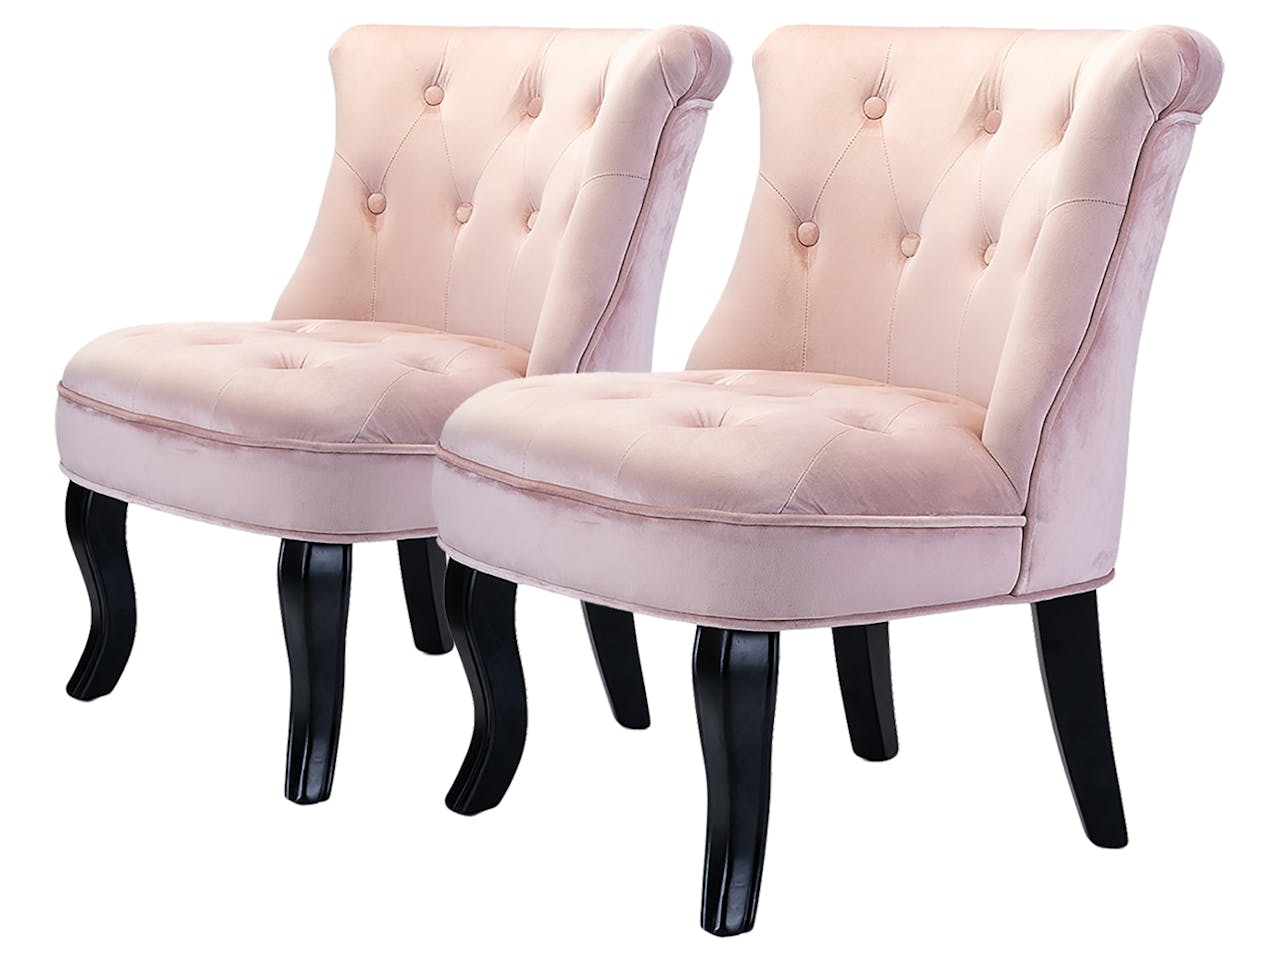 Jane Accent Chair 14 Karat Home Boutique Furniture In Fort Worth